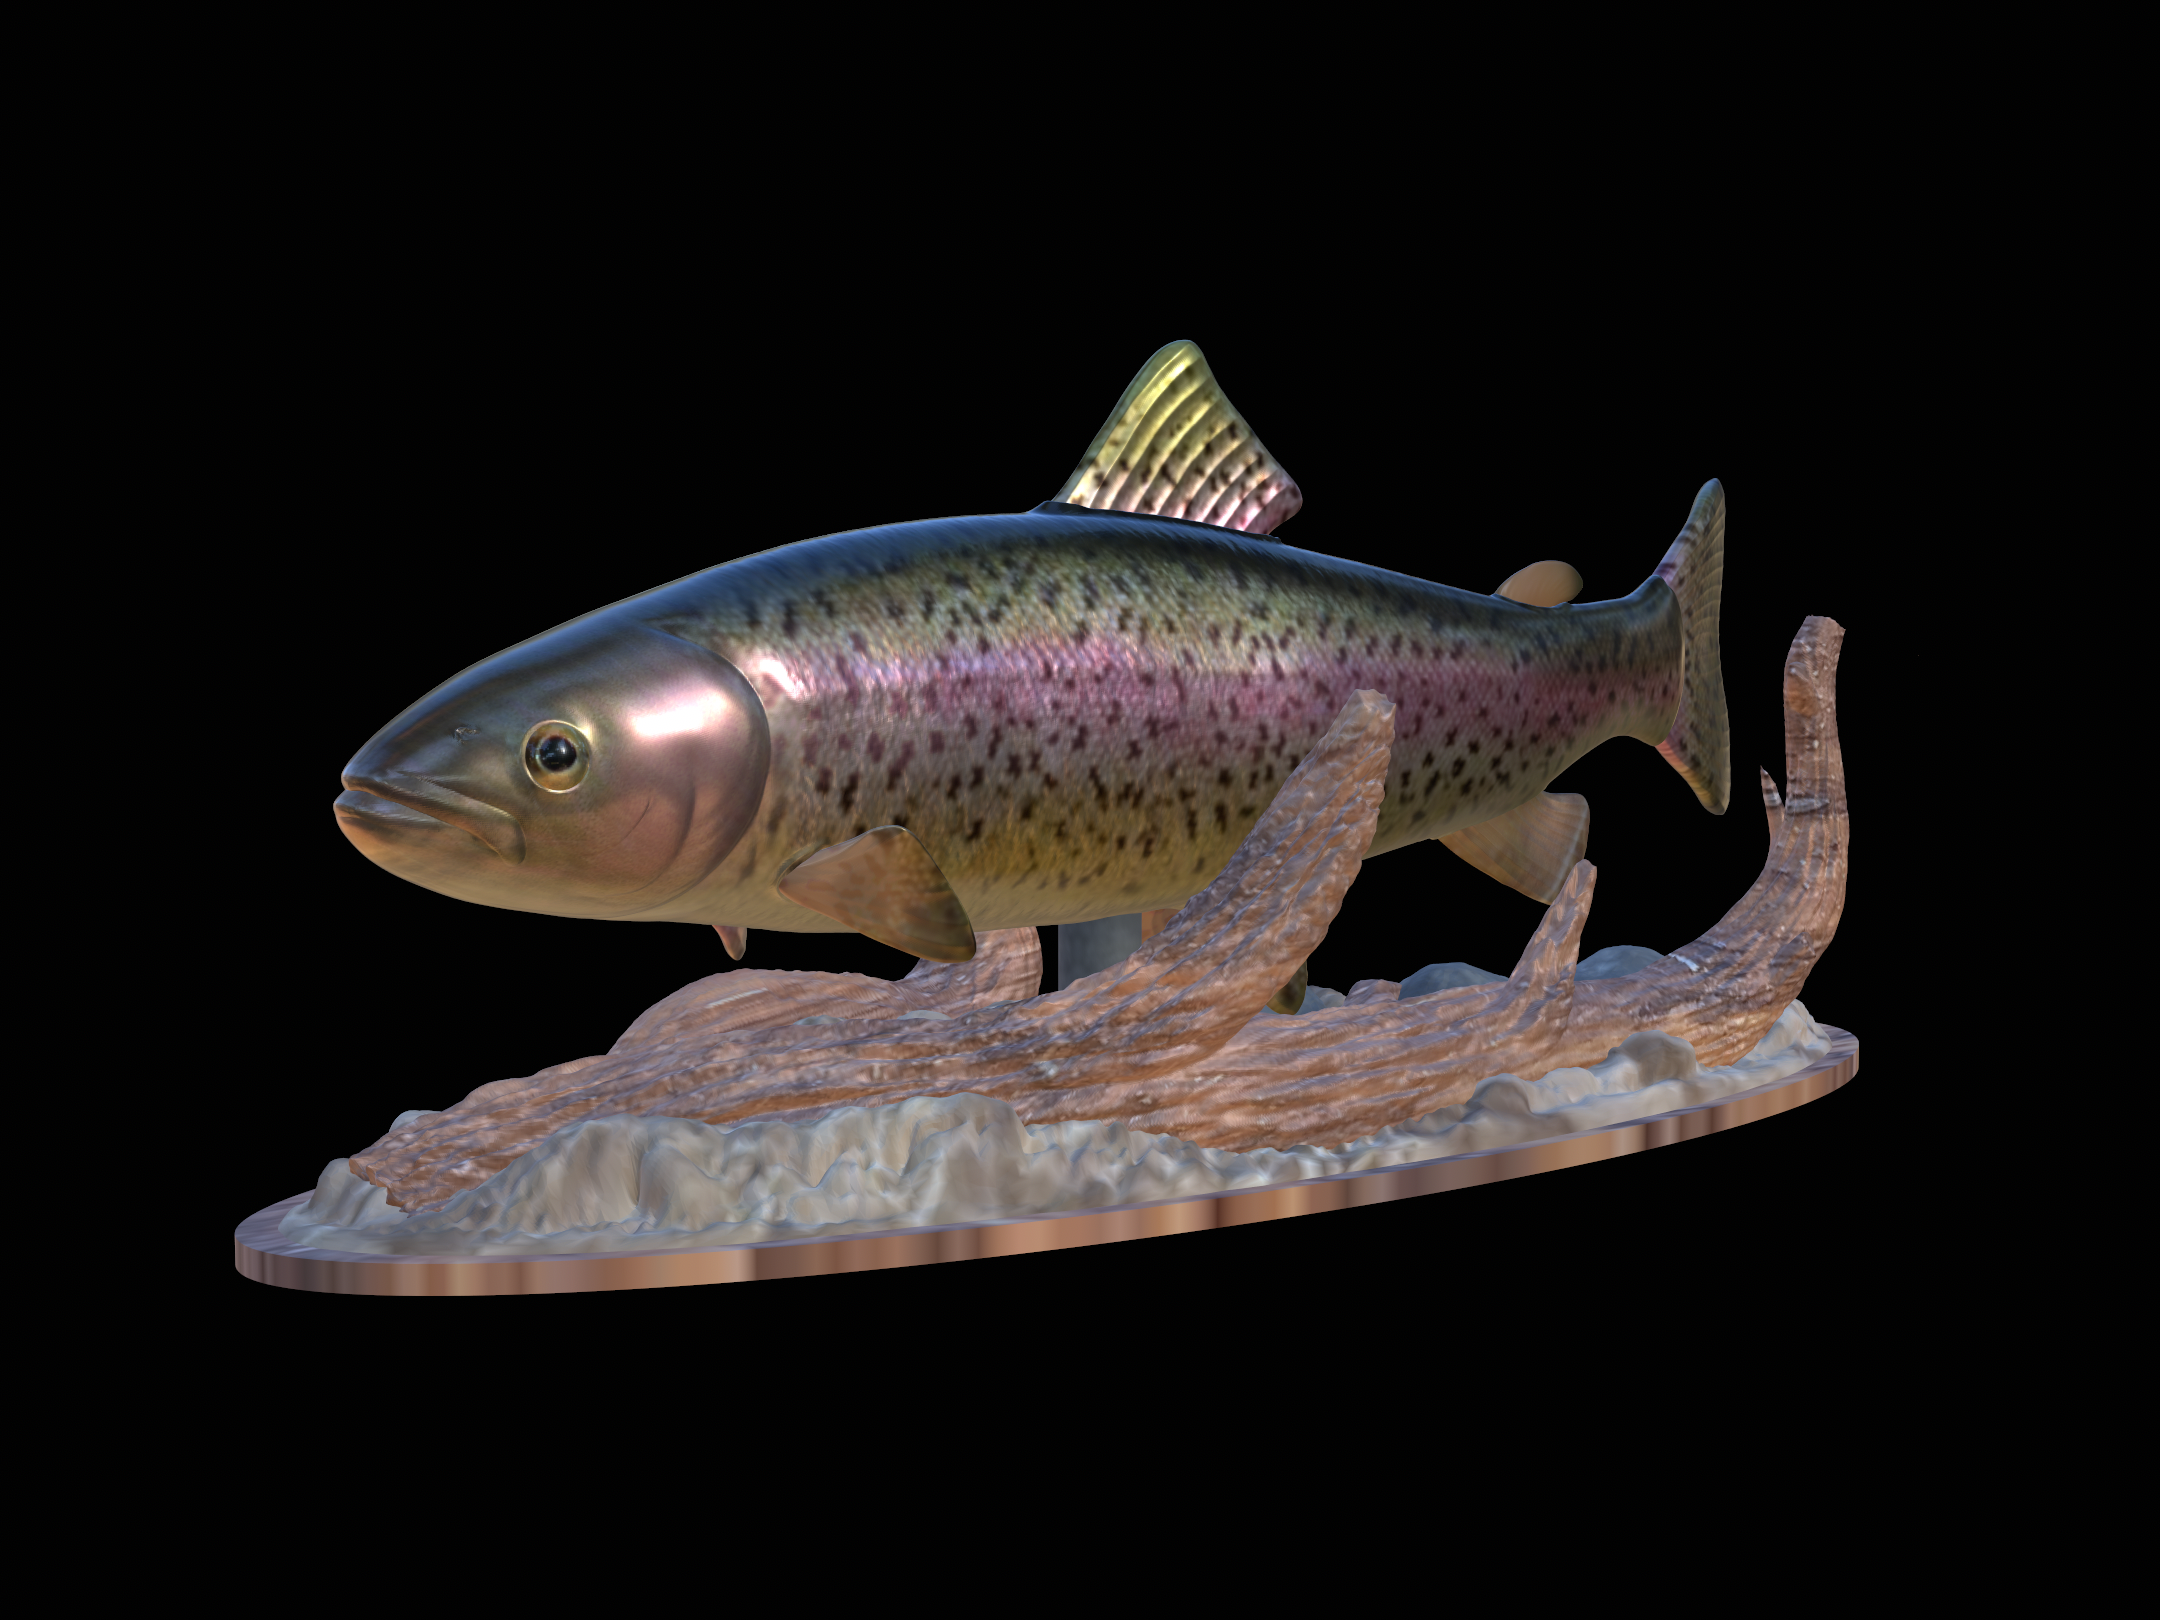 3D Printed rainbow trout 2.0 underwater statue by artman